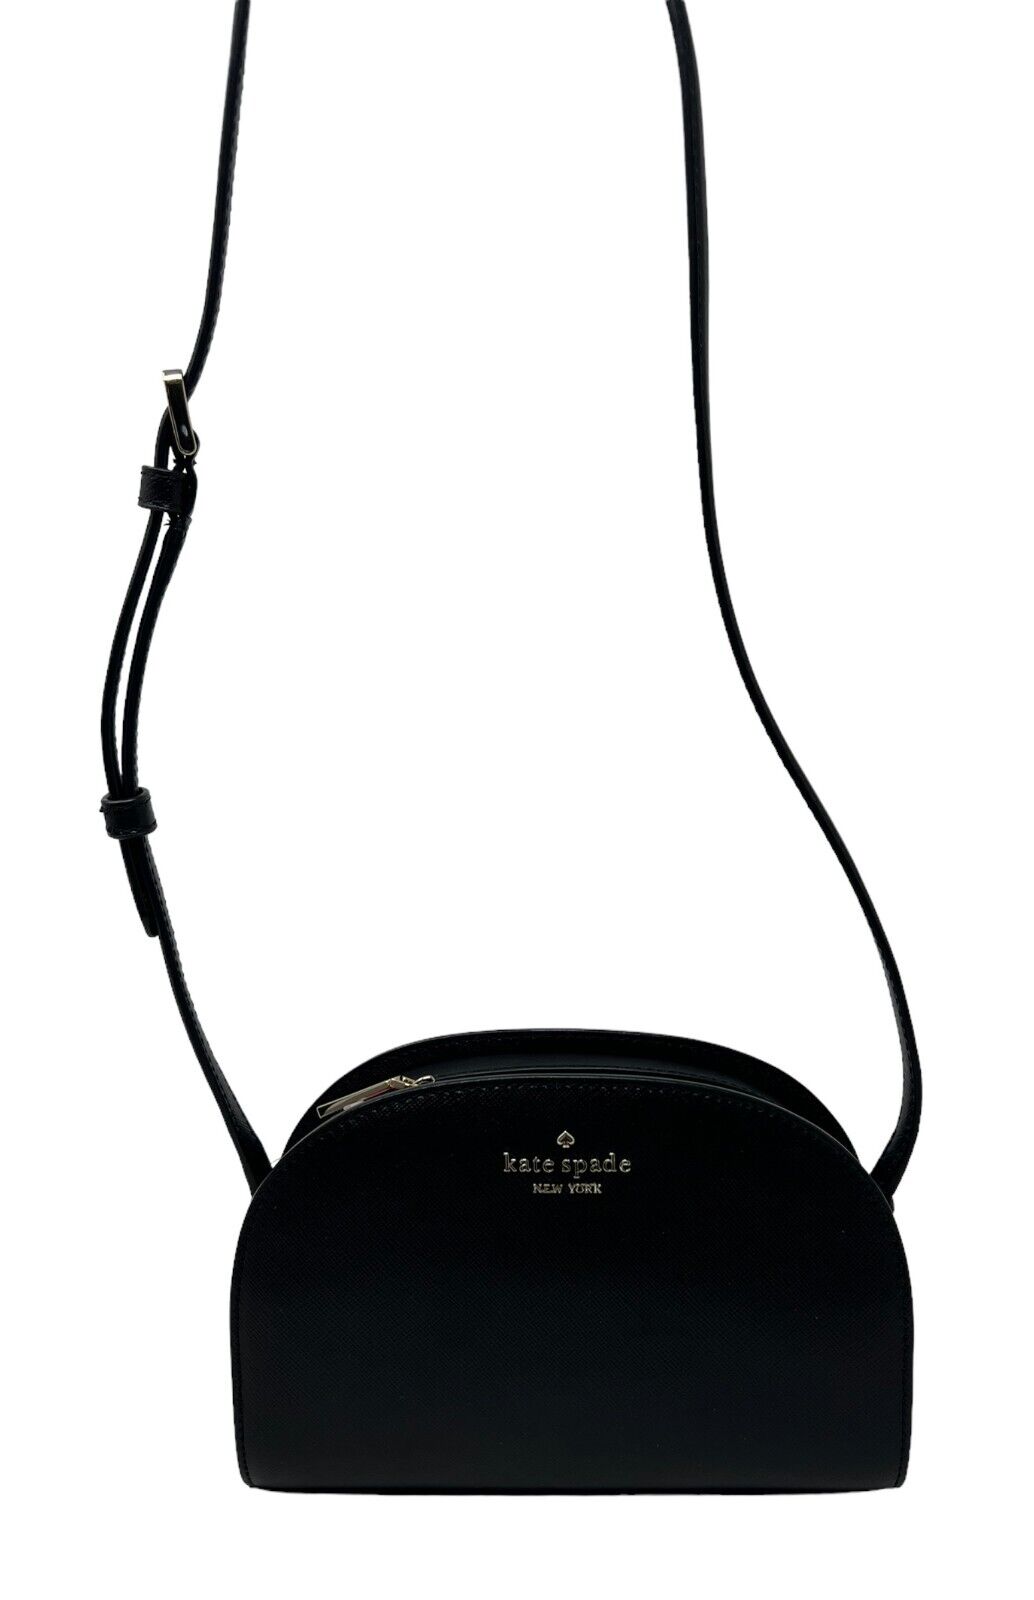 Kate Spade Perry Saffiano Leather Black Dome Crossbody Bag K8697 $279